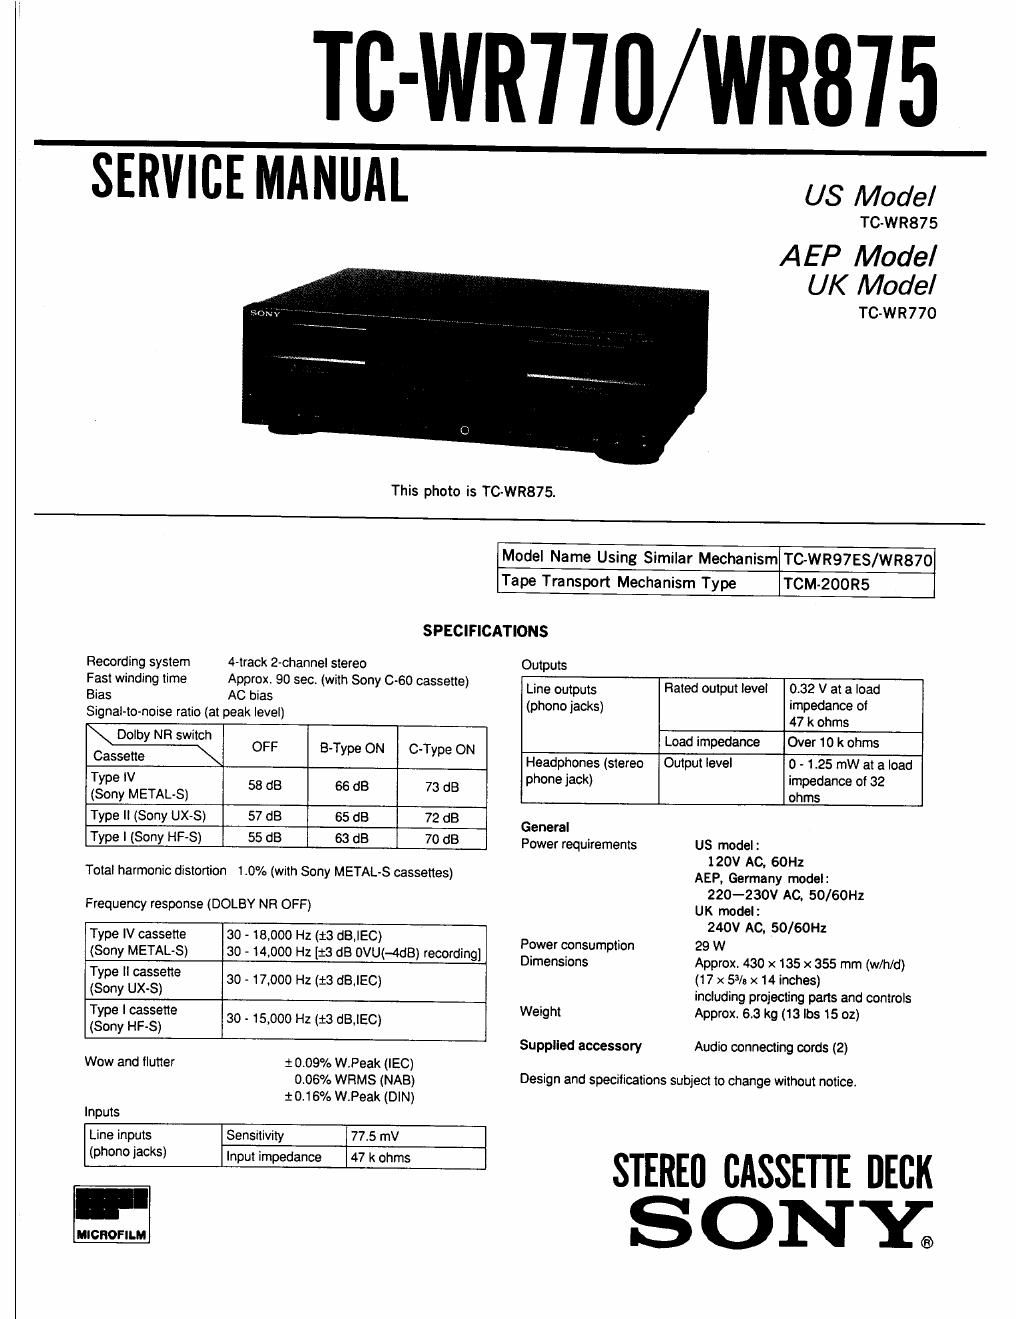 sony tc wr 875 service manual